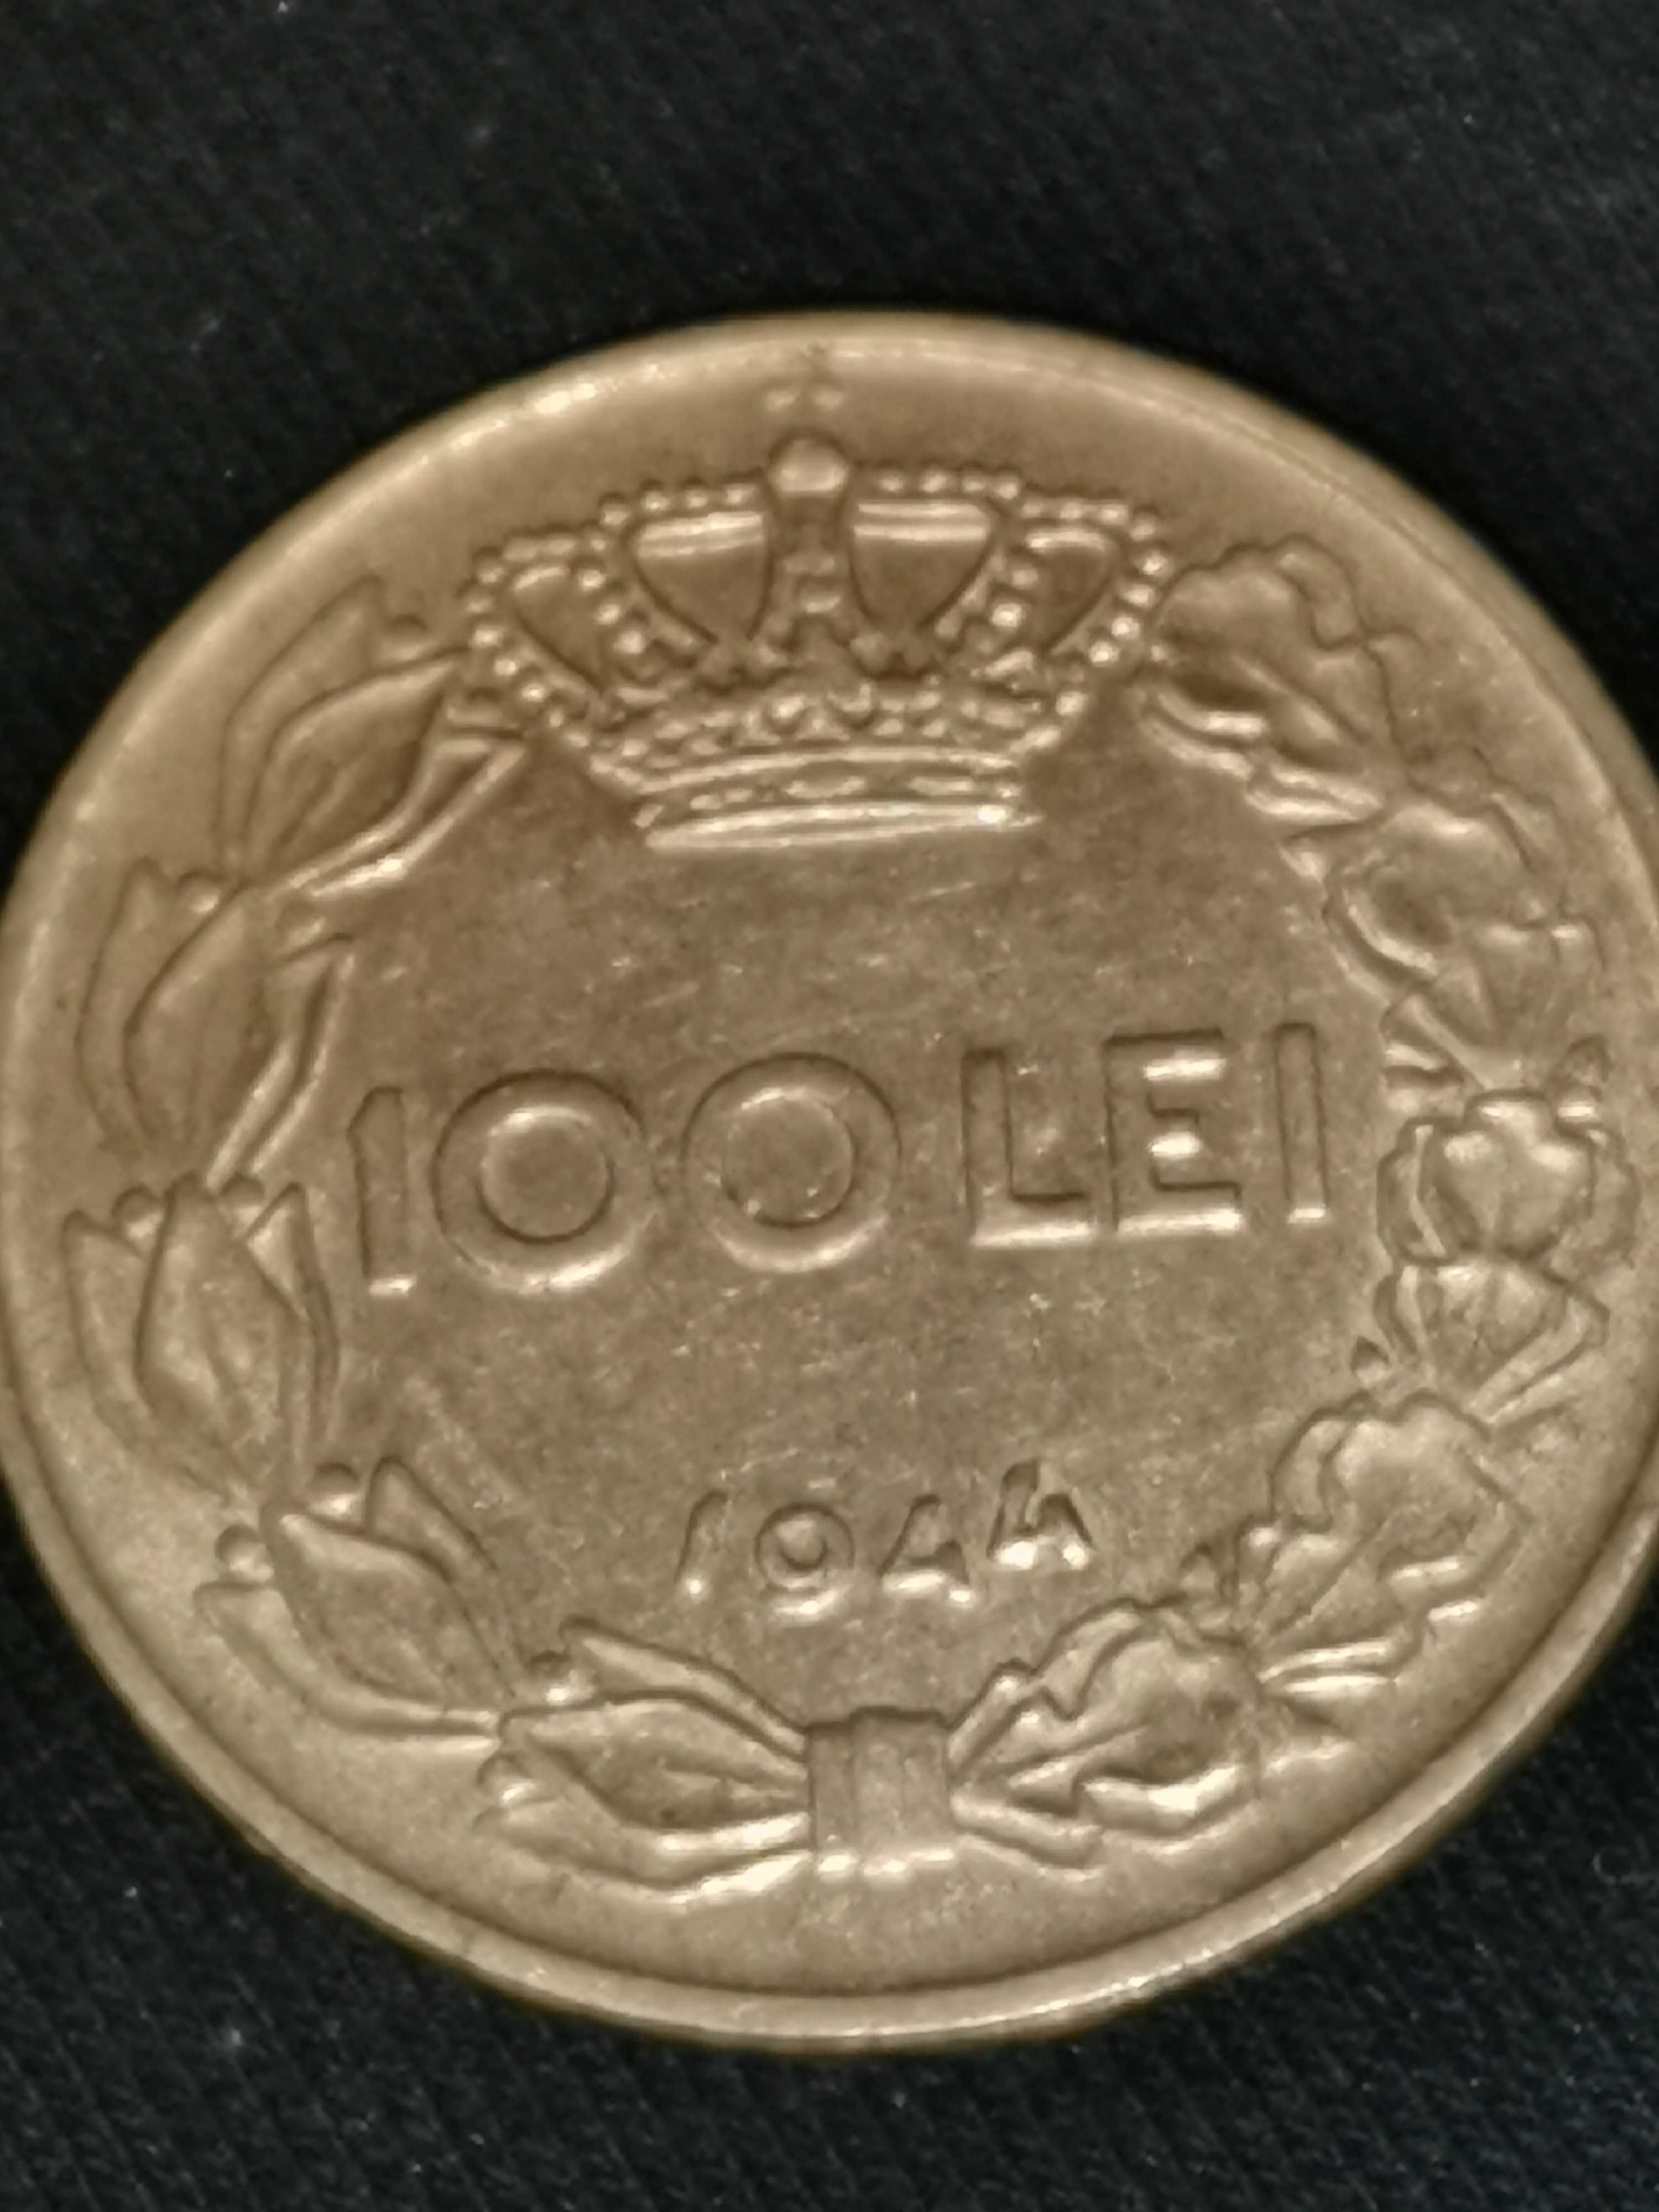 Monede vechi colectie